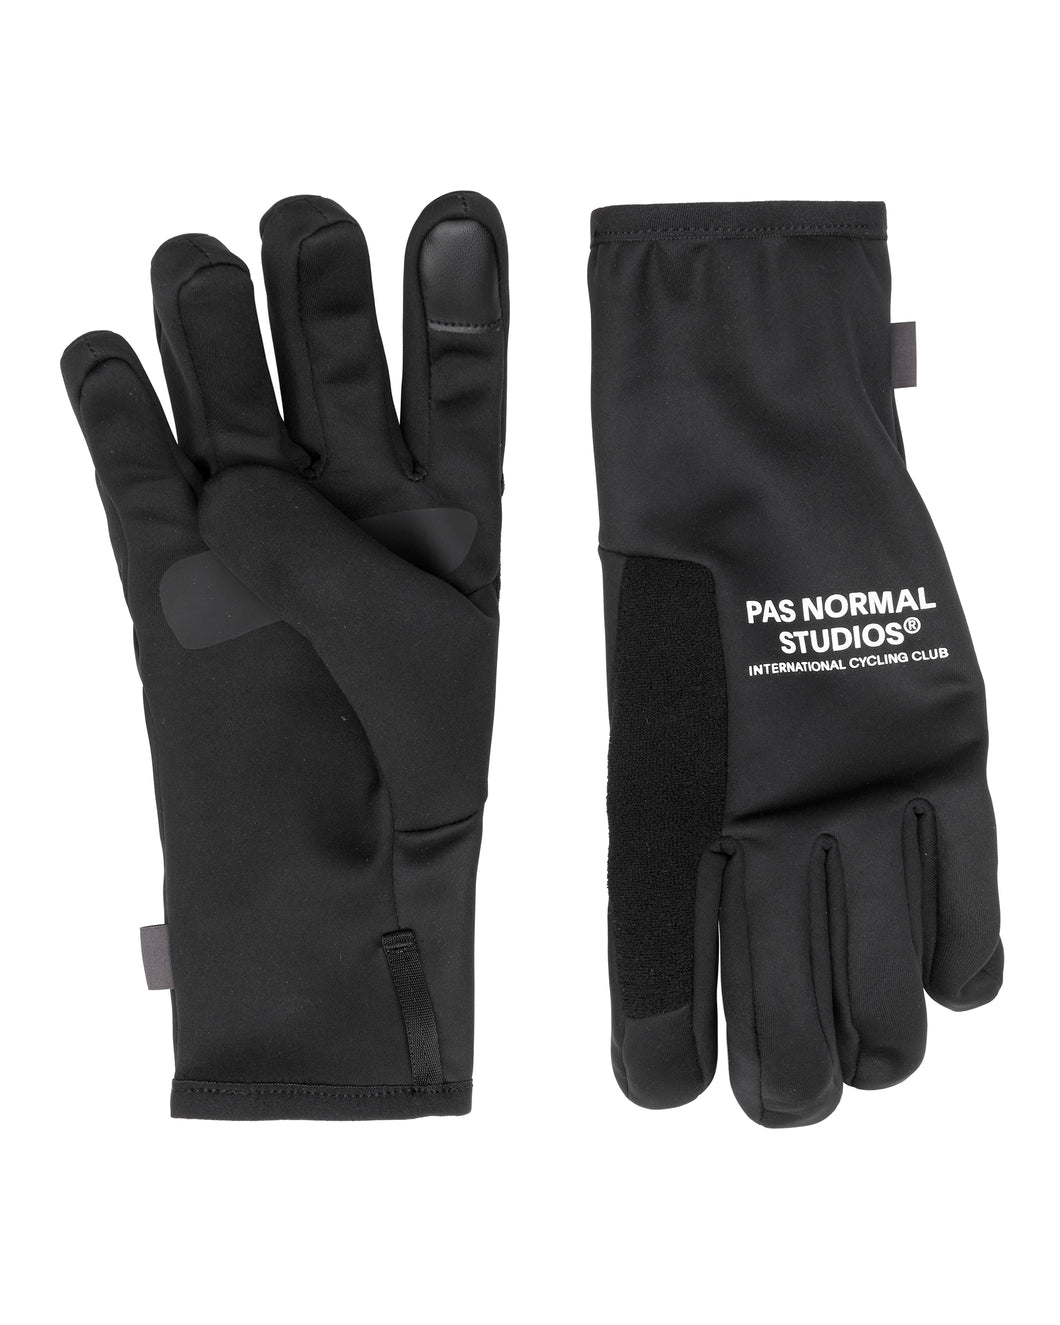 Pas Normal Studios - Logo Thermal Gloves - Black